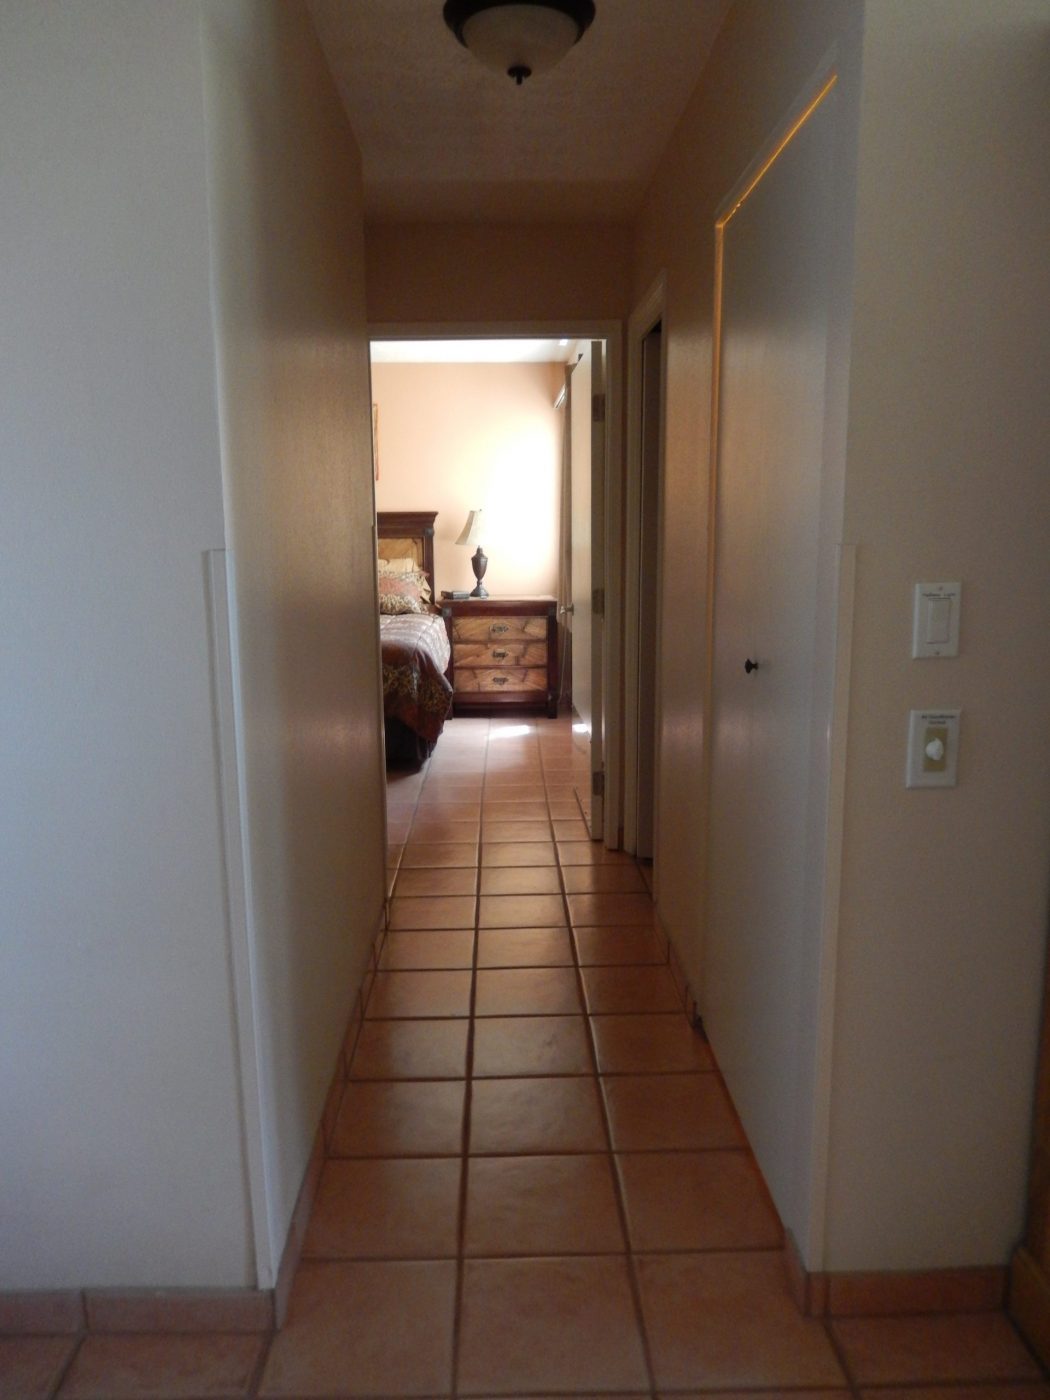 009b1-hallway-to-bedroom.jpg.jpg